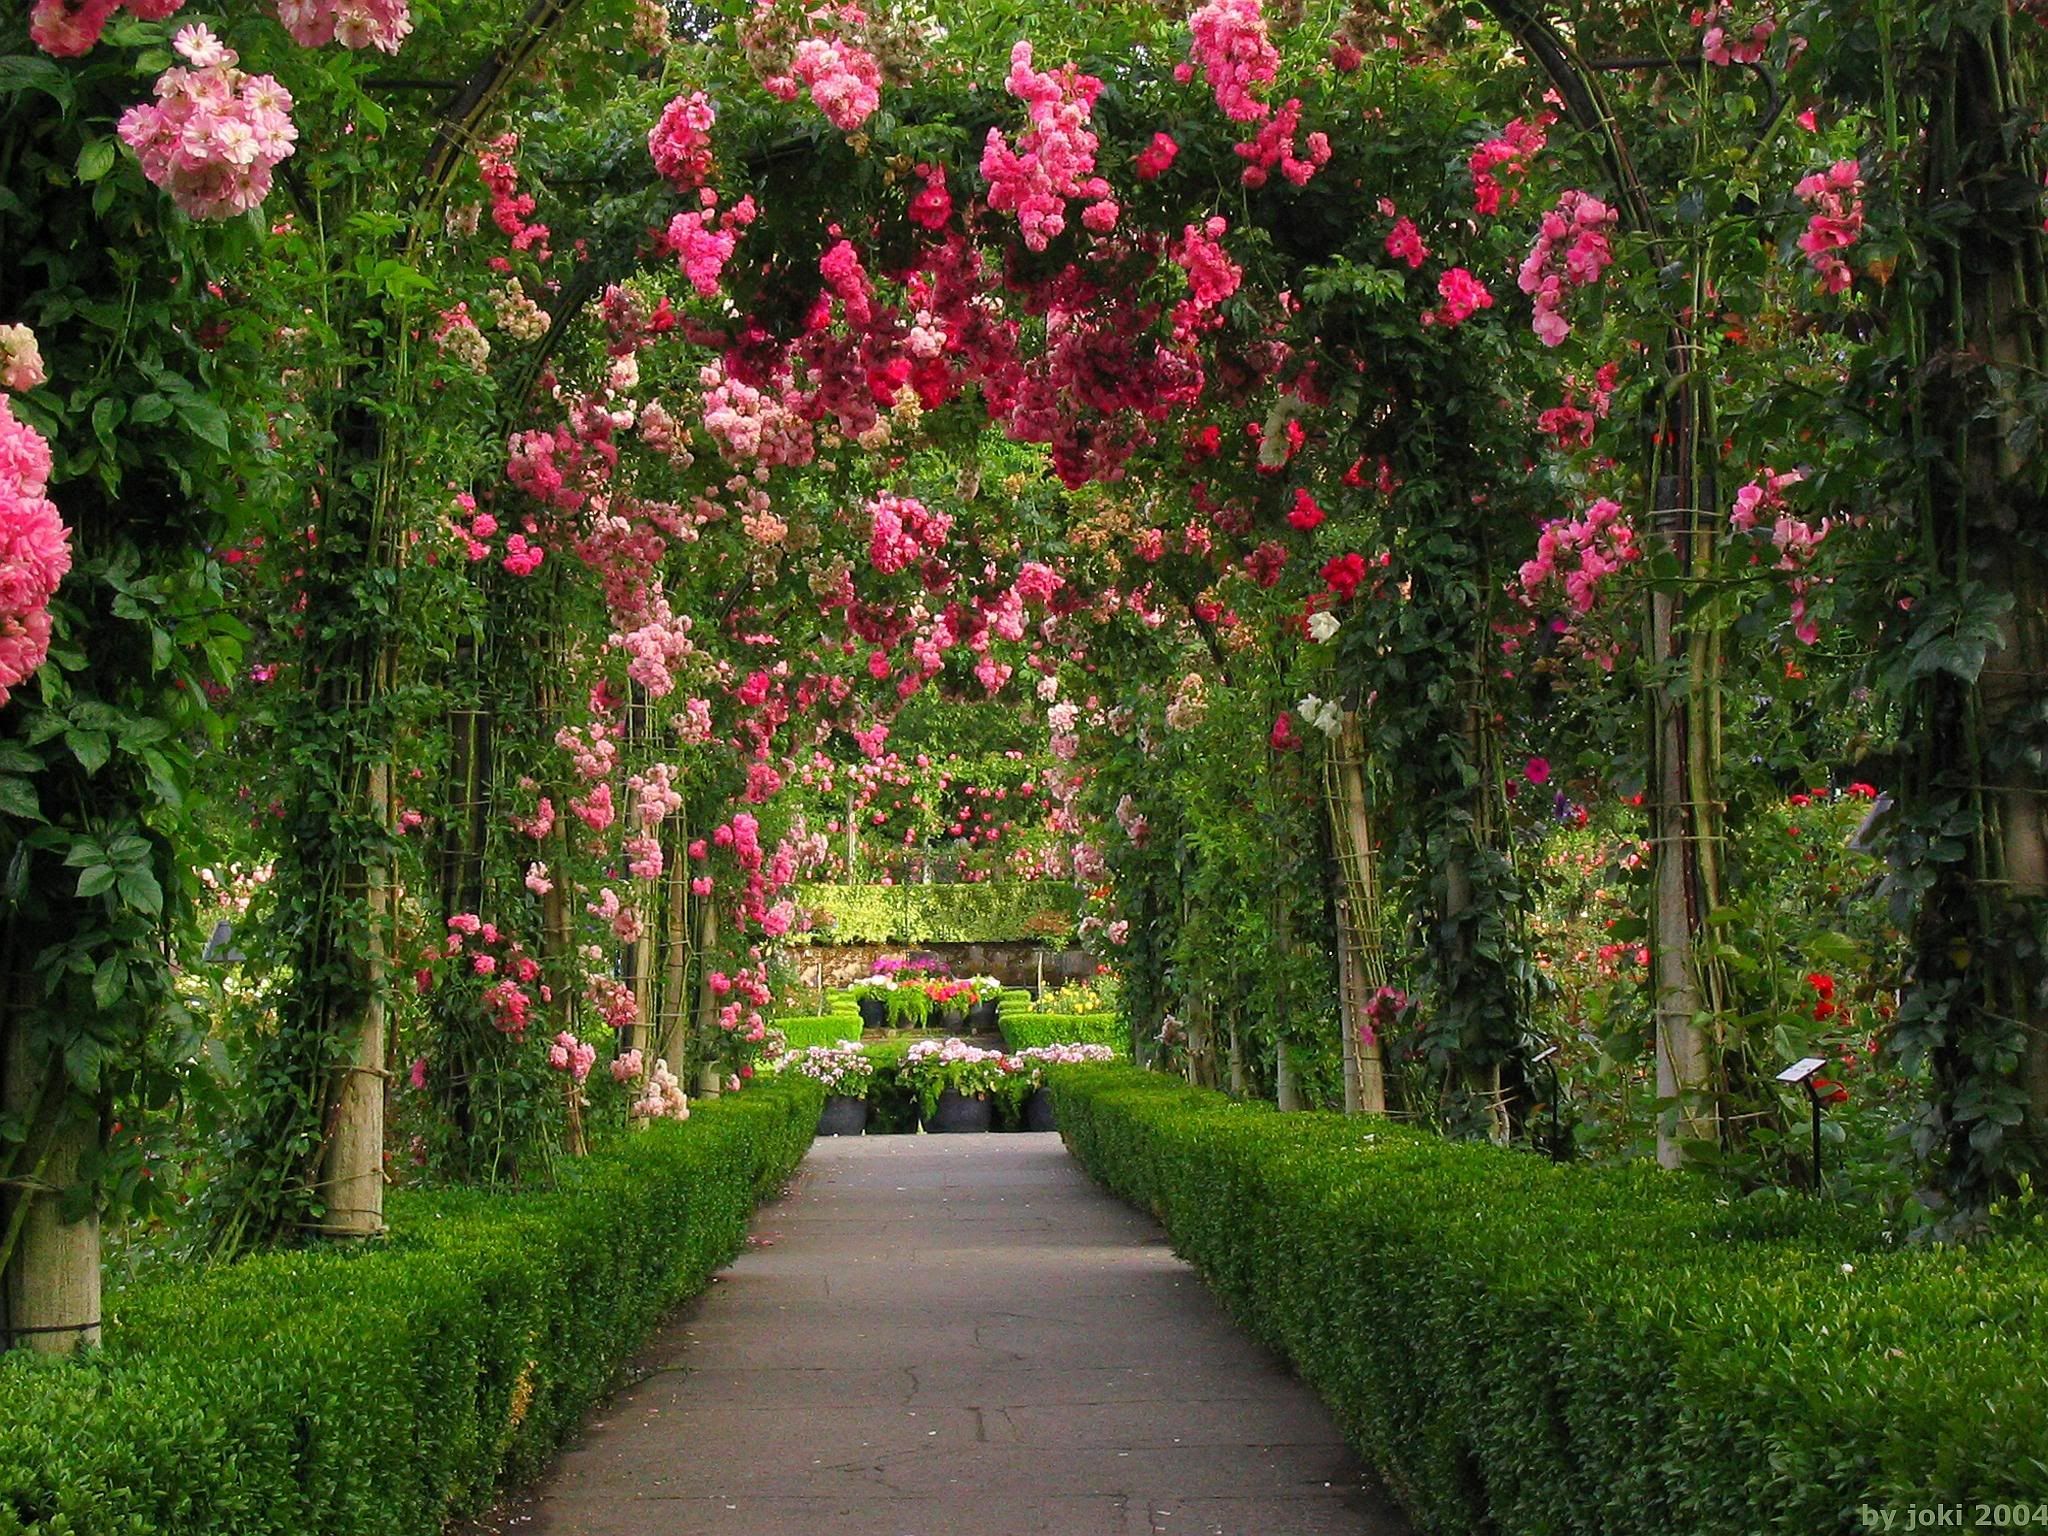 Rose Gardens Wallpapers